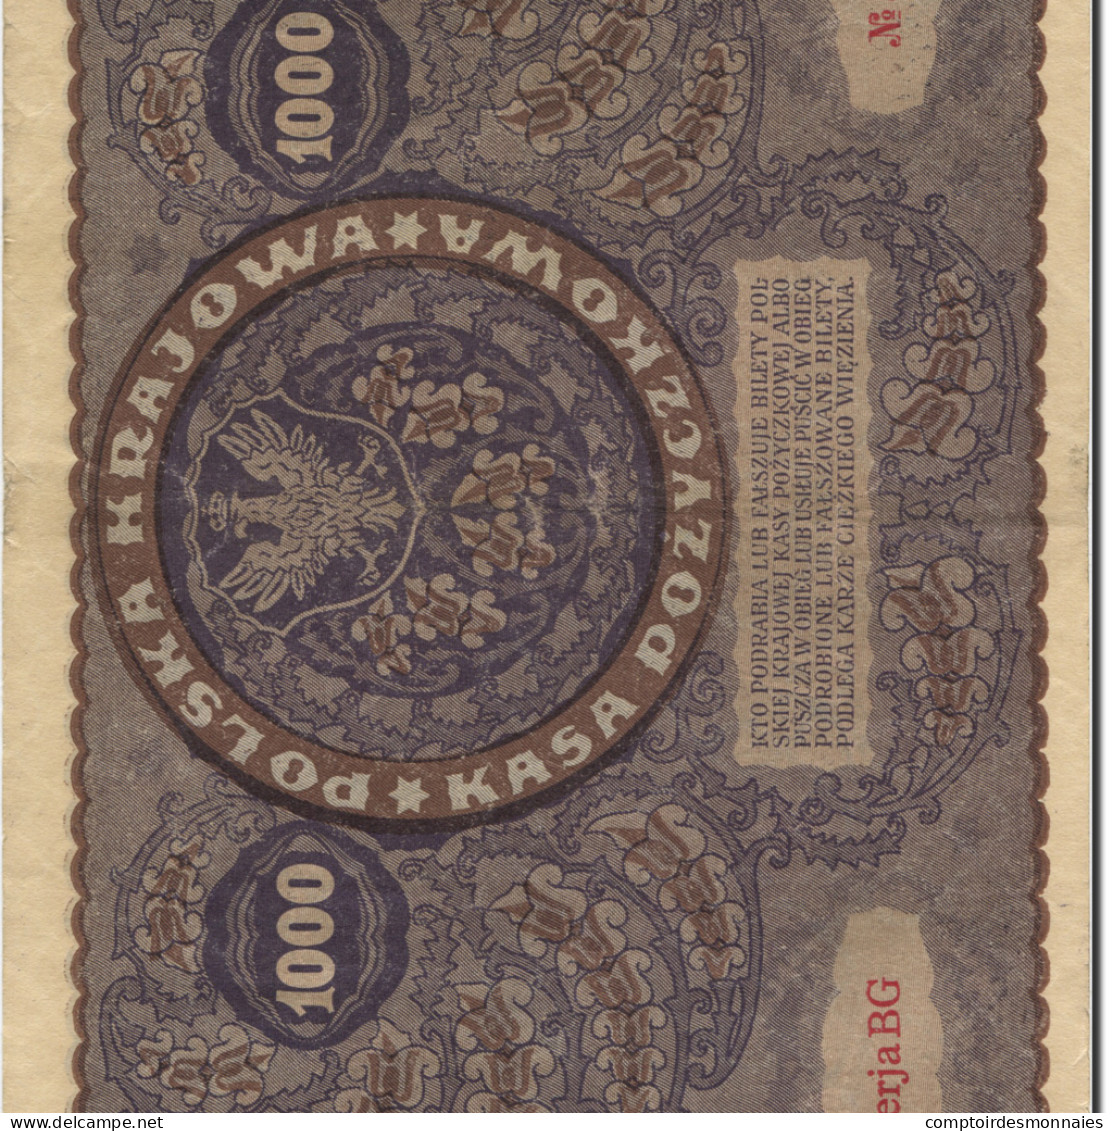 Billet, Pologne, 1000 Marek, 1919, 1919-08-23, KM:29, SUP - Pologne